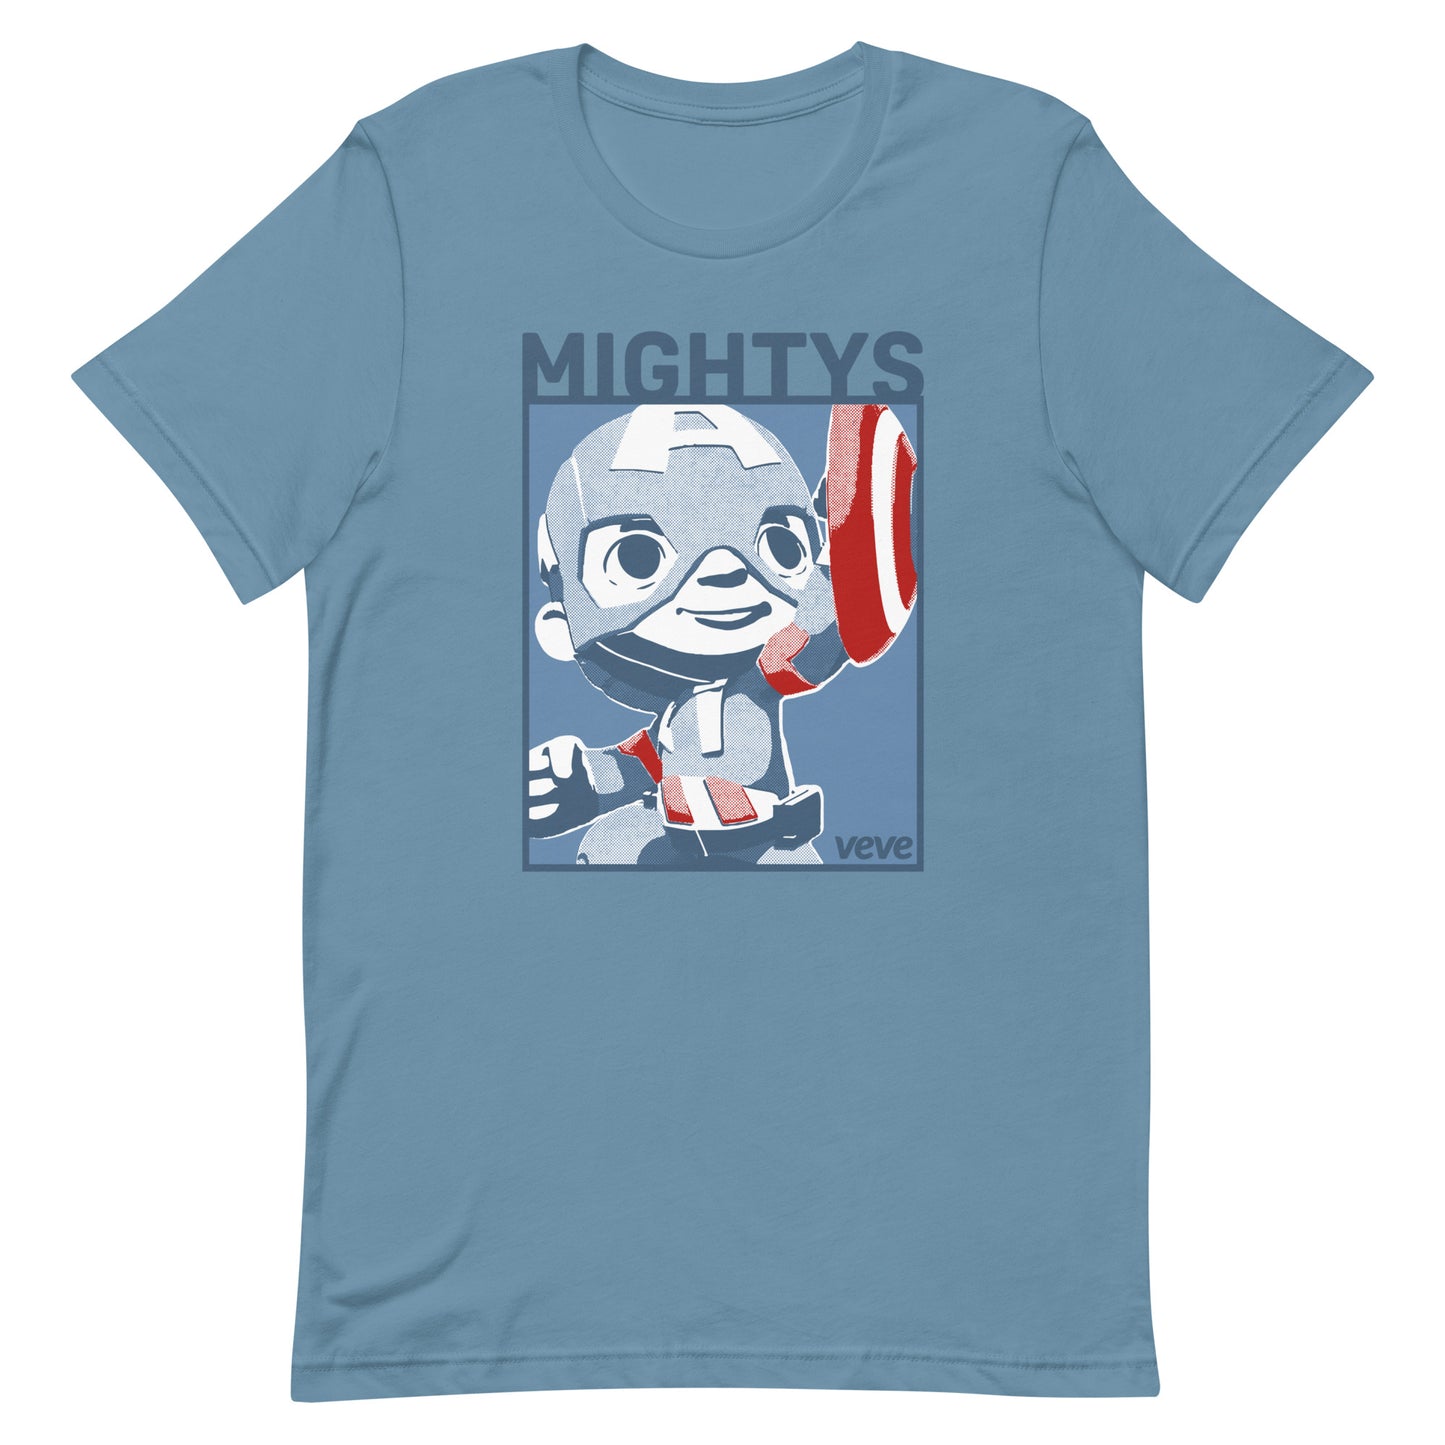 Captain Mightys VeVe T-Shirt